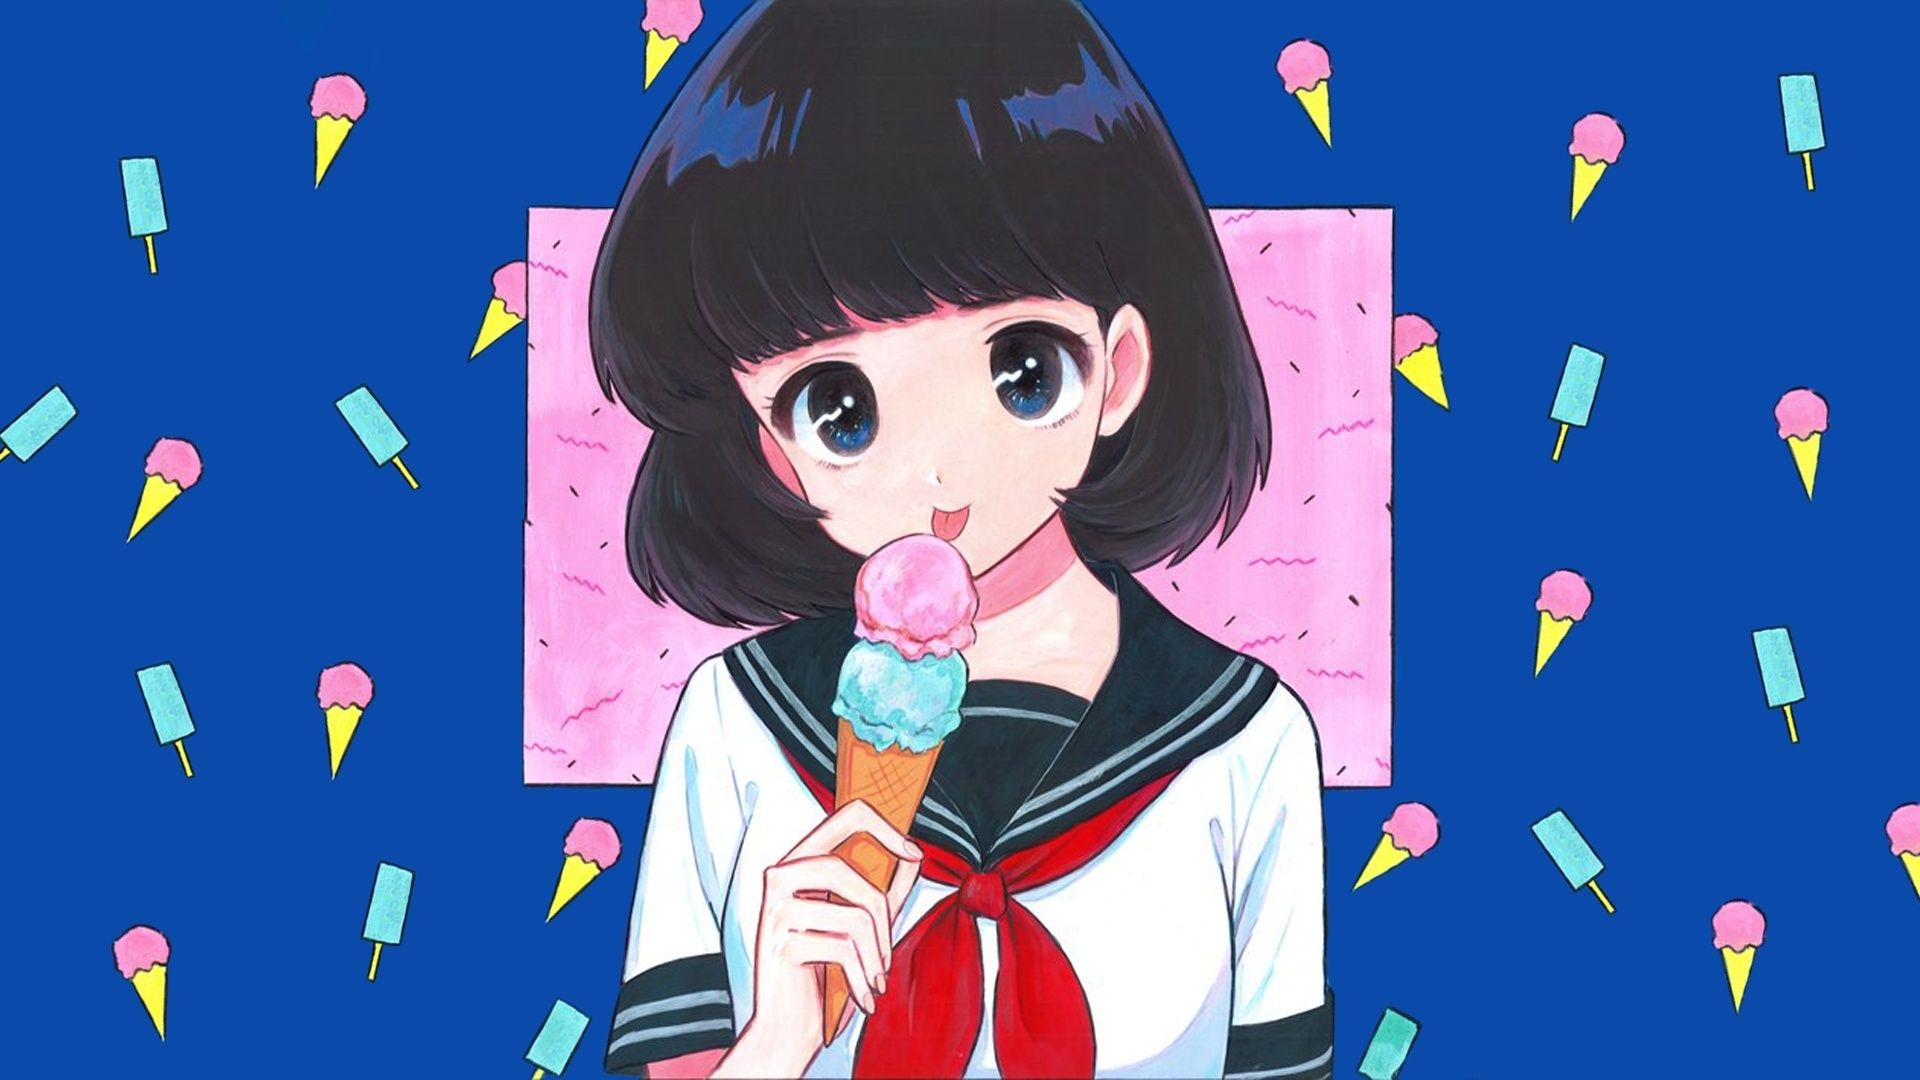 HD wallpaper female anime eating ice cream on stick HD wallpaper flcl  girl  Wallpaper Flare